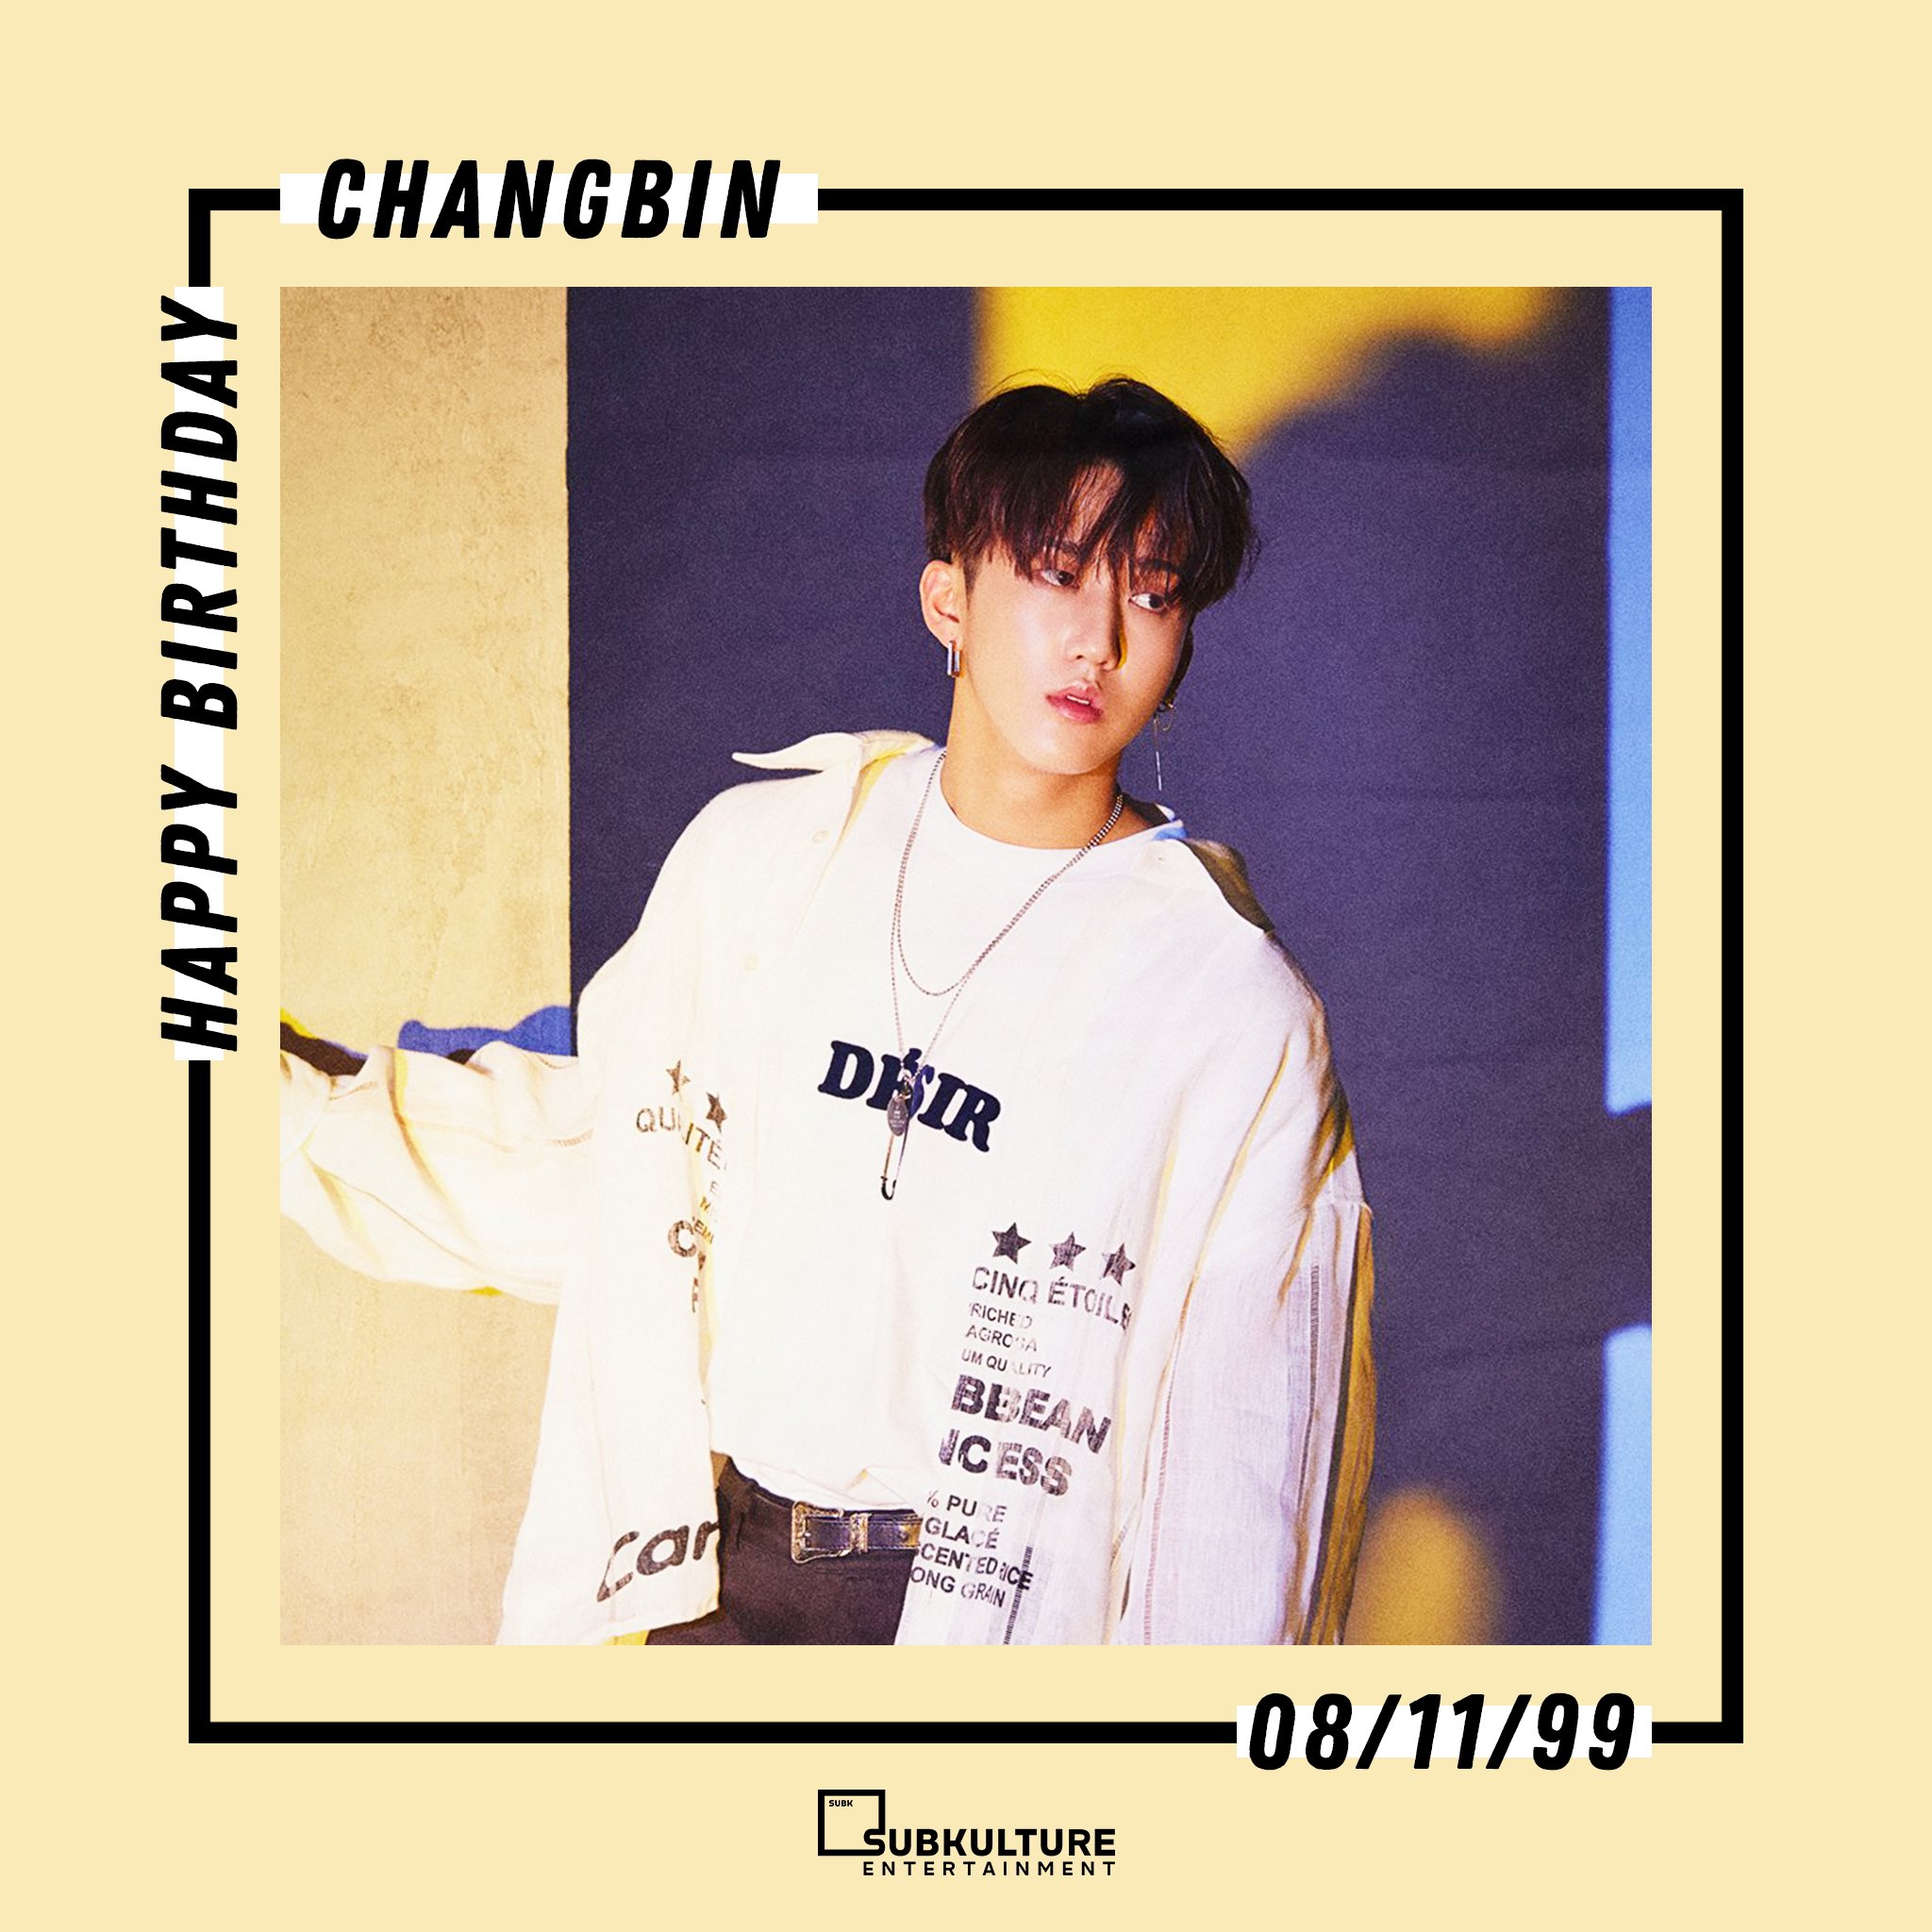 Changbin birthday